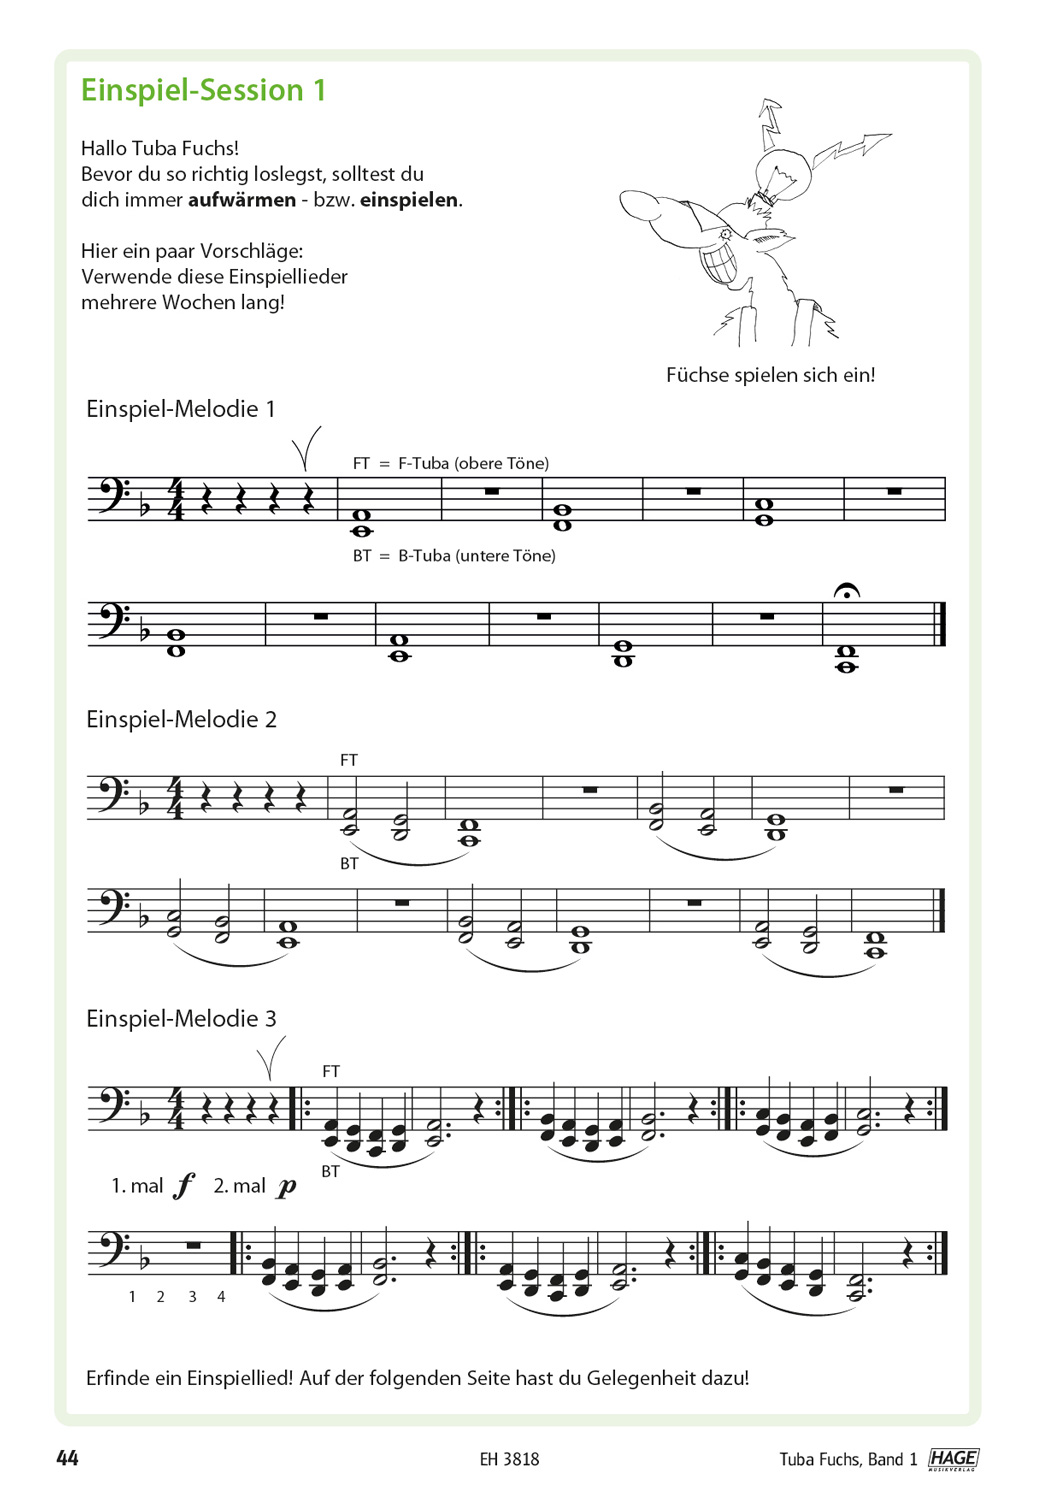 Tuba Fuchs Band 1 Seiten 11